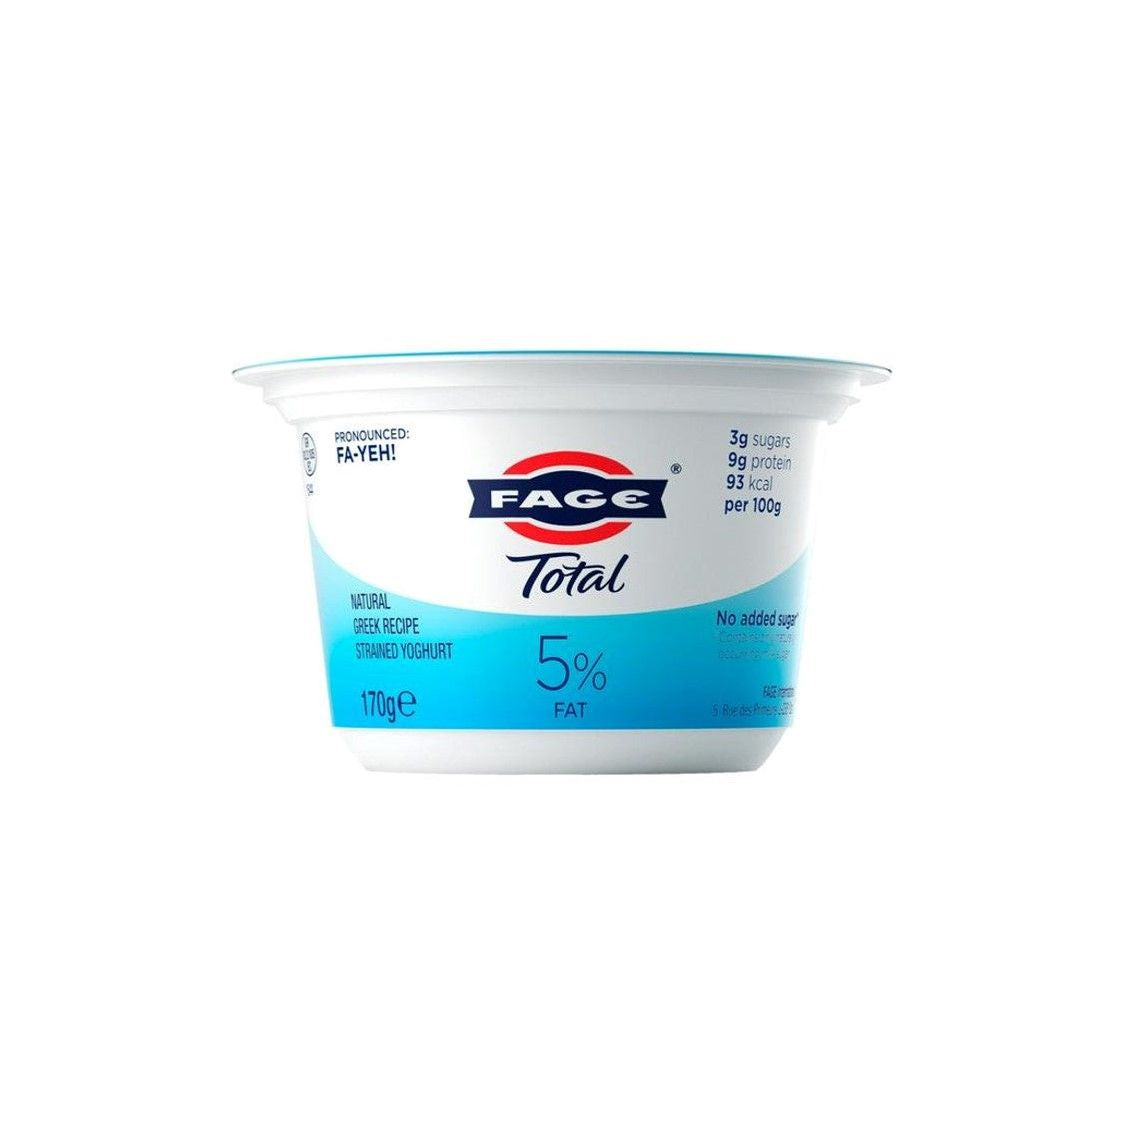 Fage Total Greek Yogurt 5% 150g